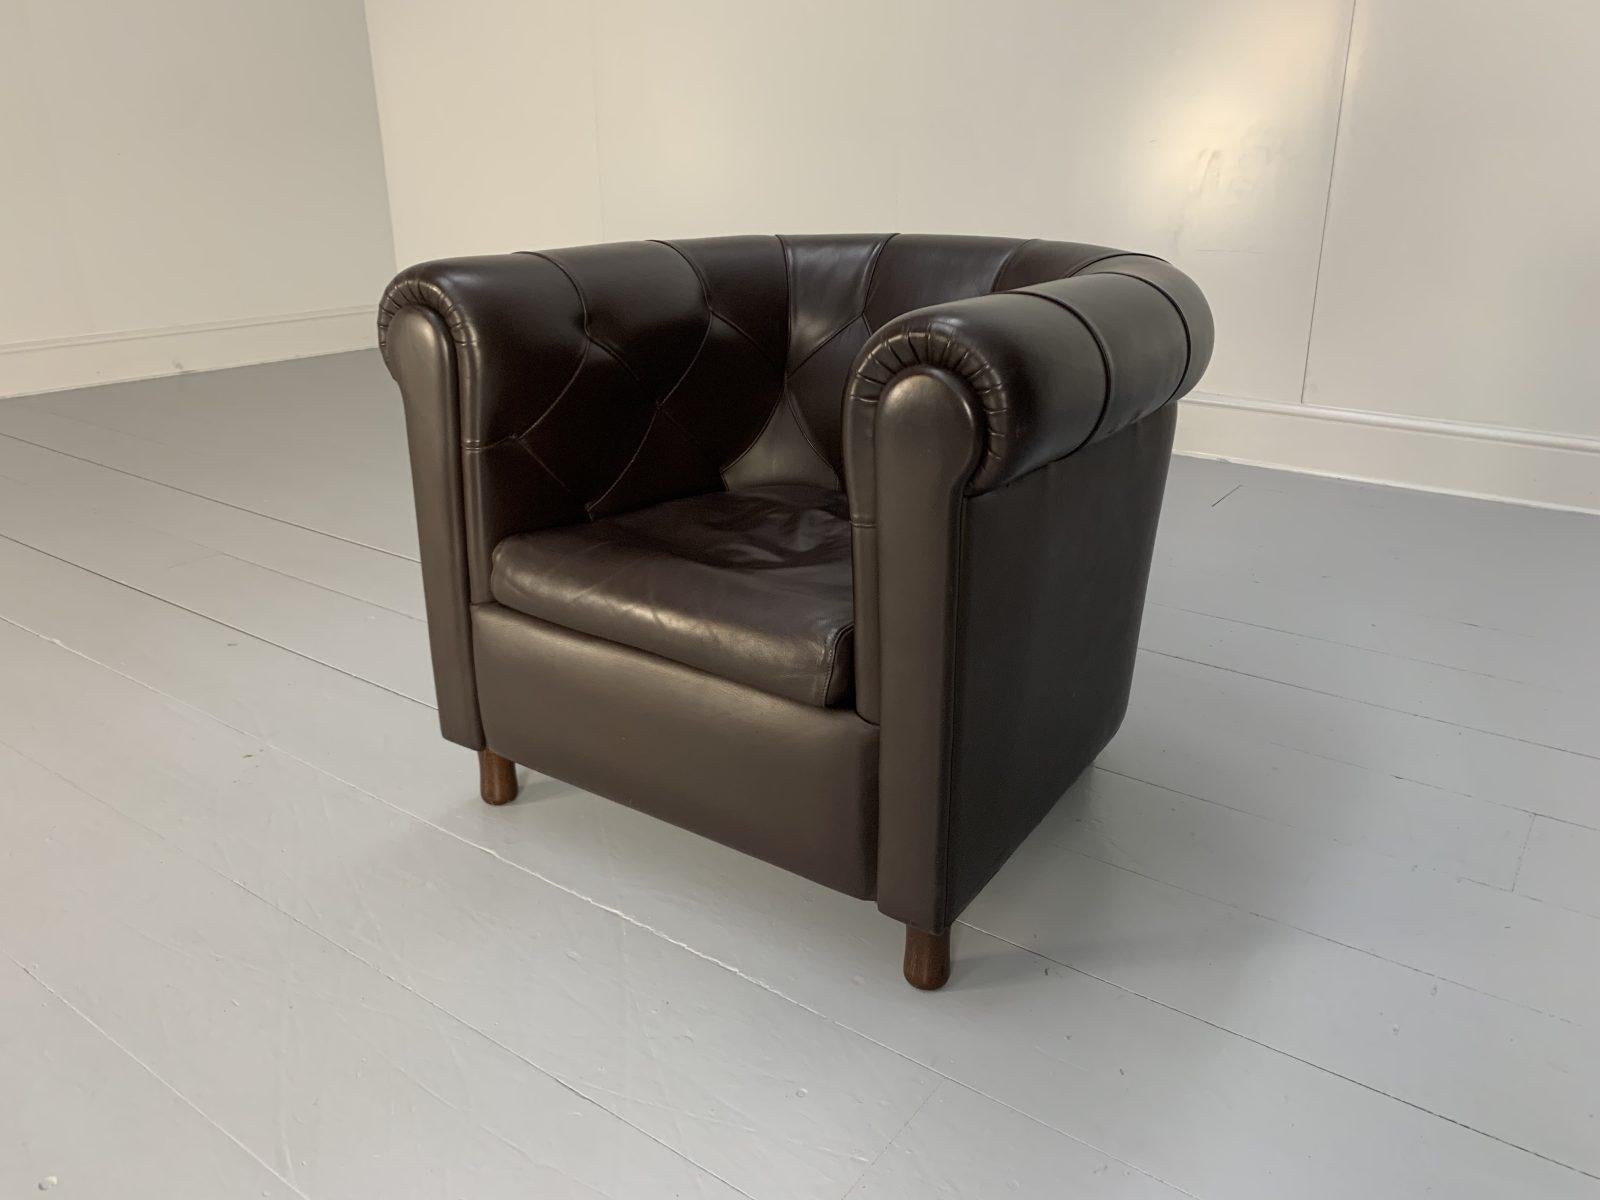 2 Poltrona Frau “Arcadia” Armchairs, in “Pelle Frau” Dark Brown Leather For Sale 9